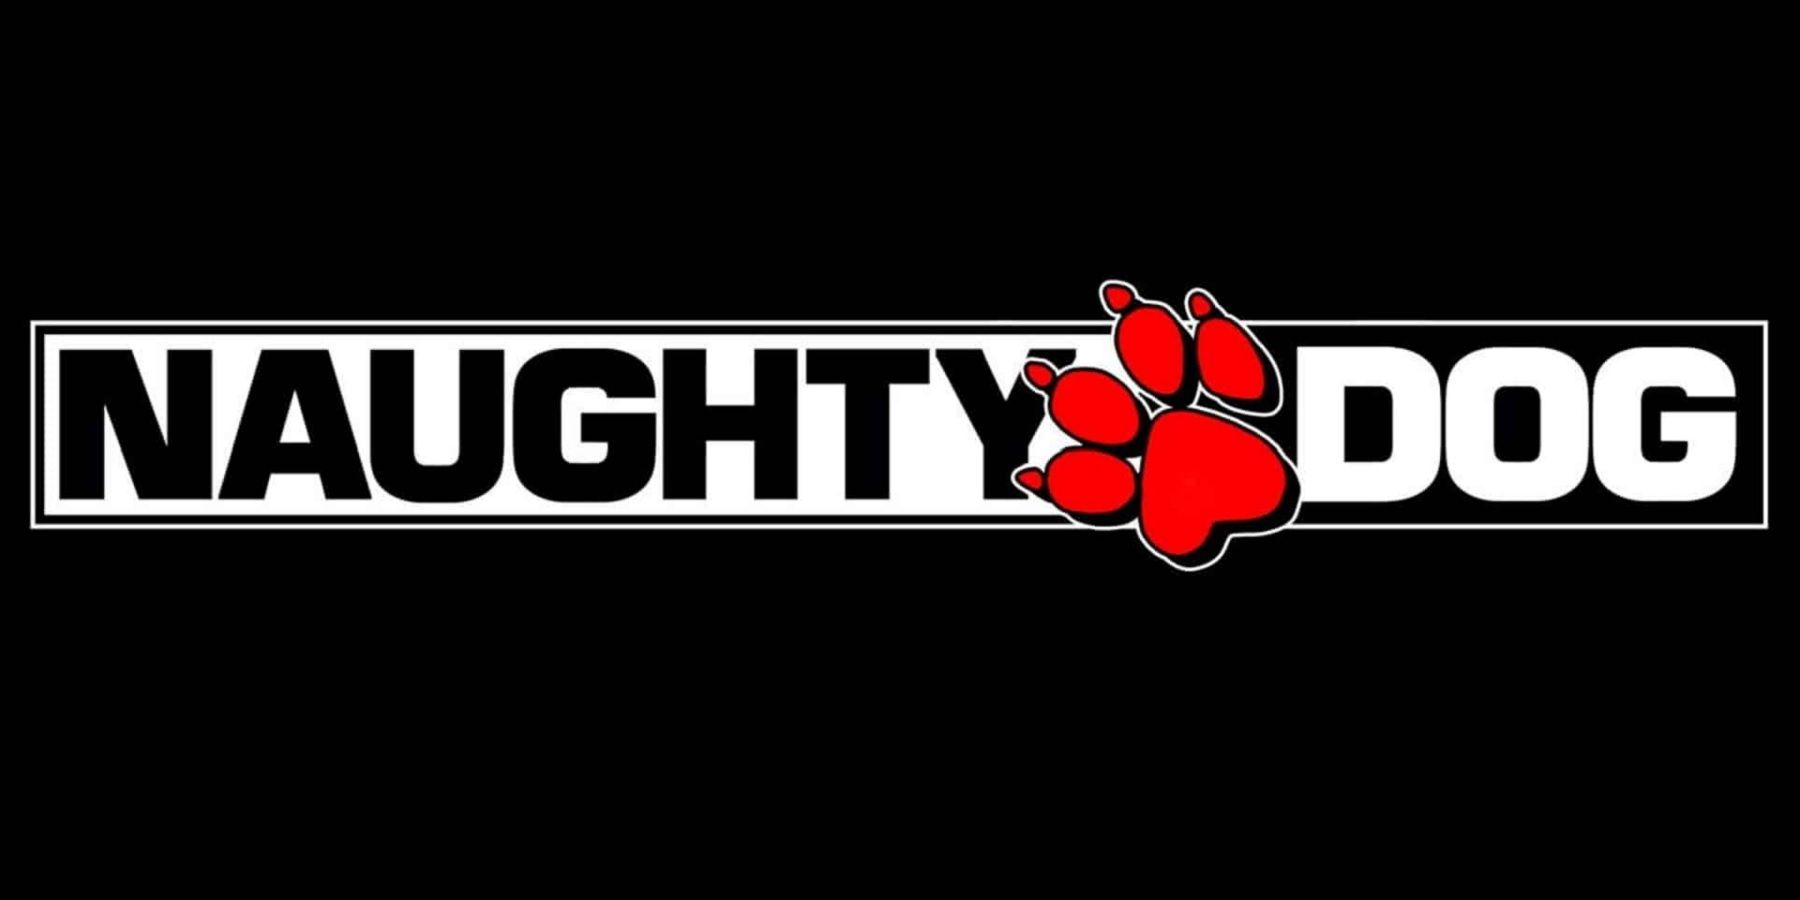 The Naughty Dog logo on a black background